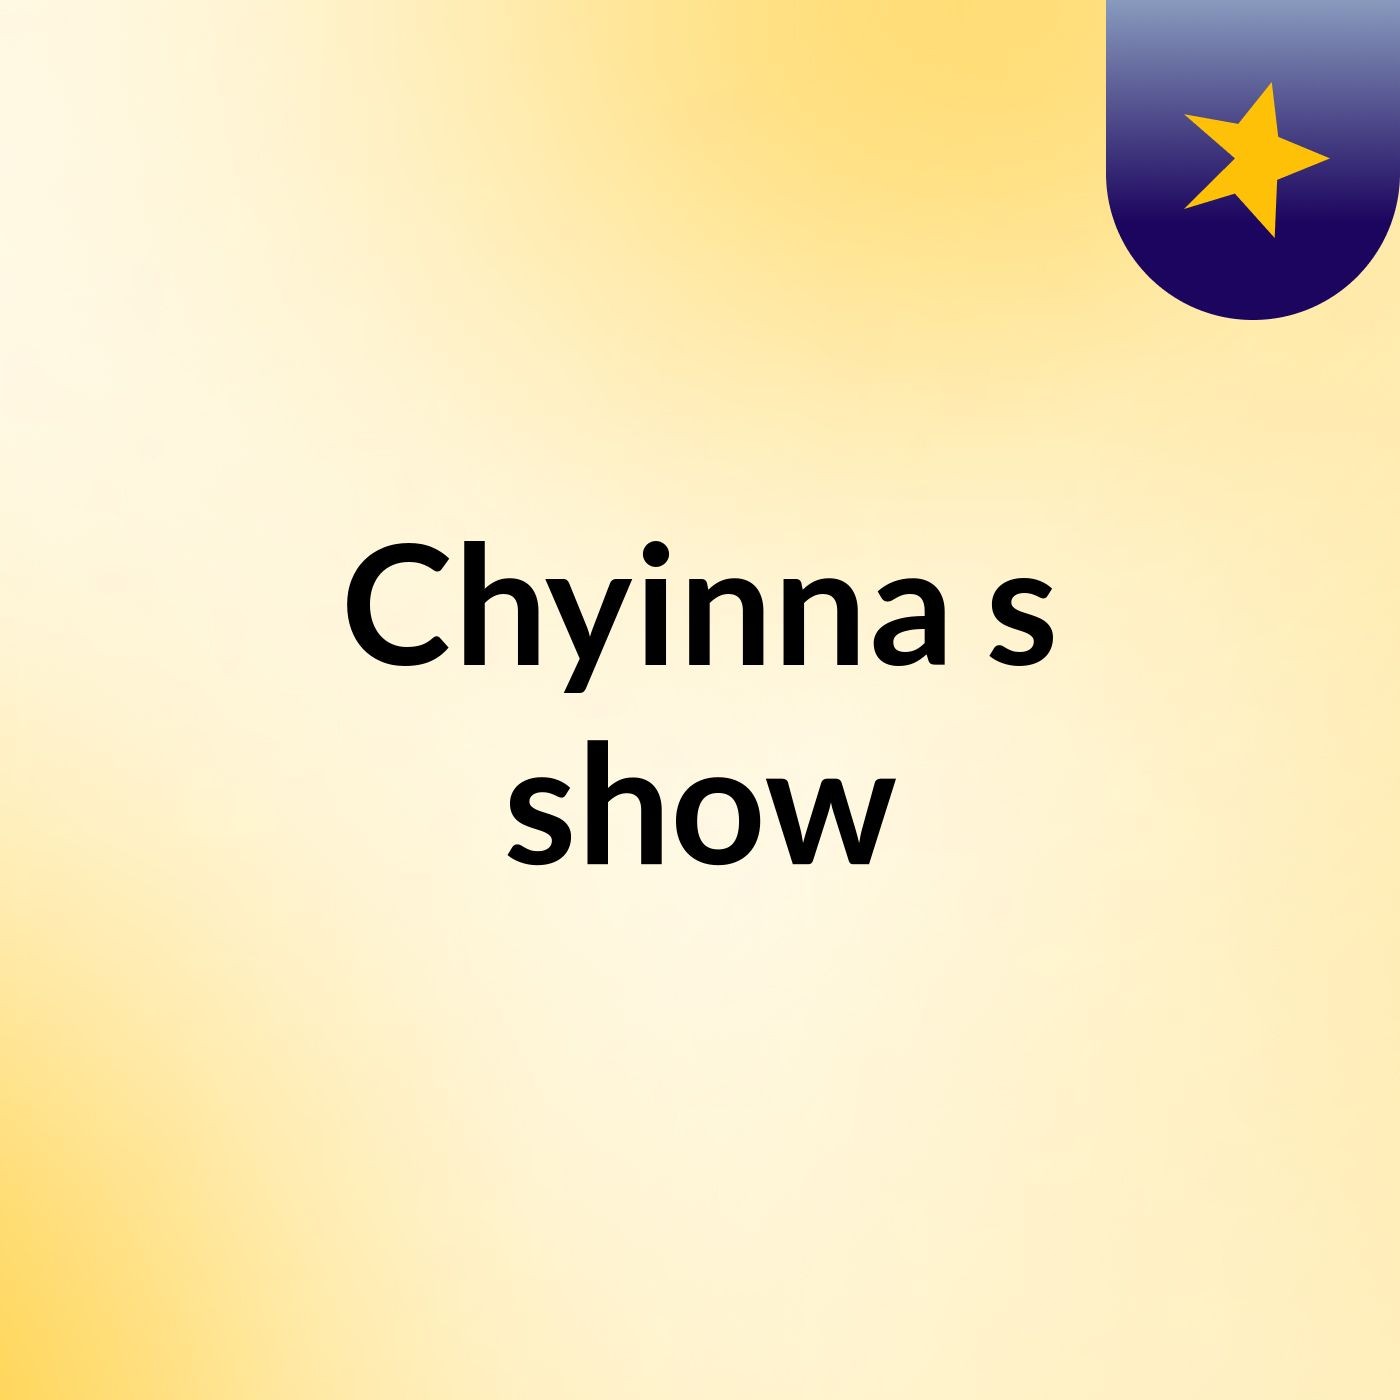 Chyinna's show